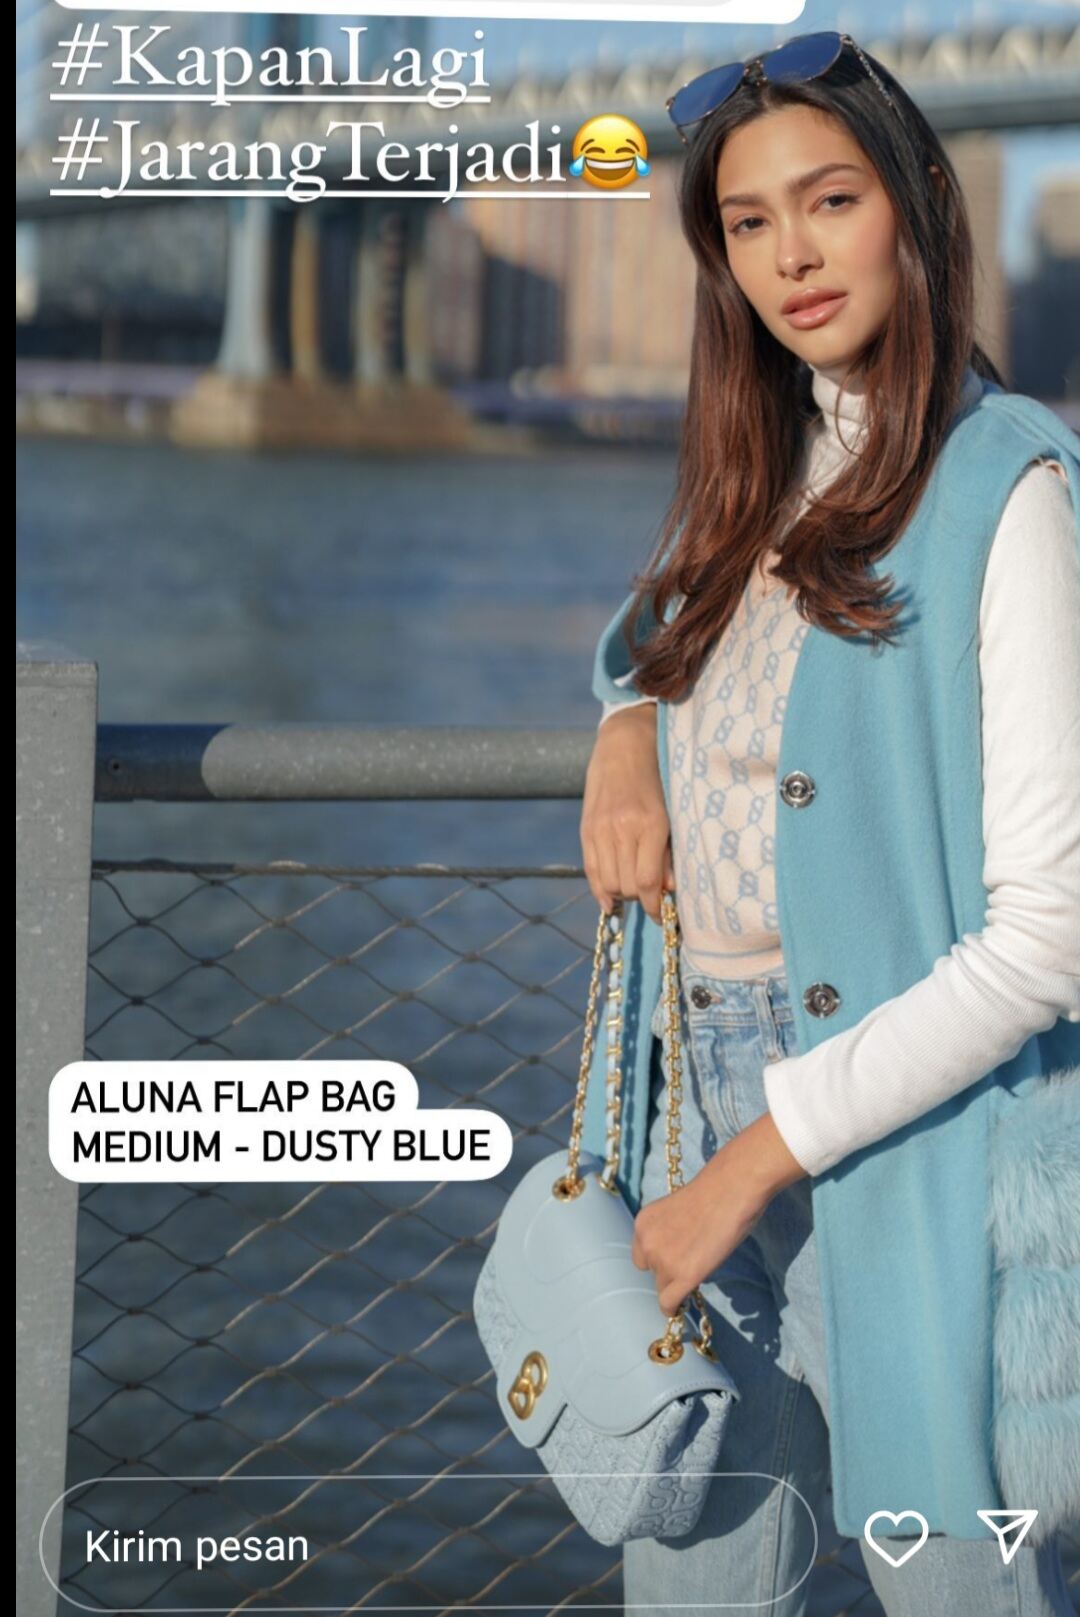 Jual Aluna Flap Bag Buttonscarves Original - Appricot, Larga